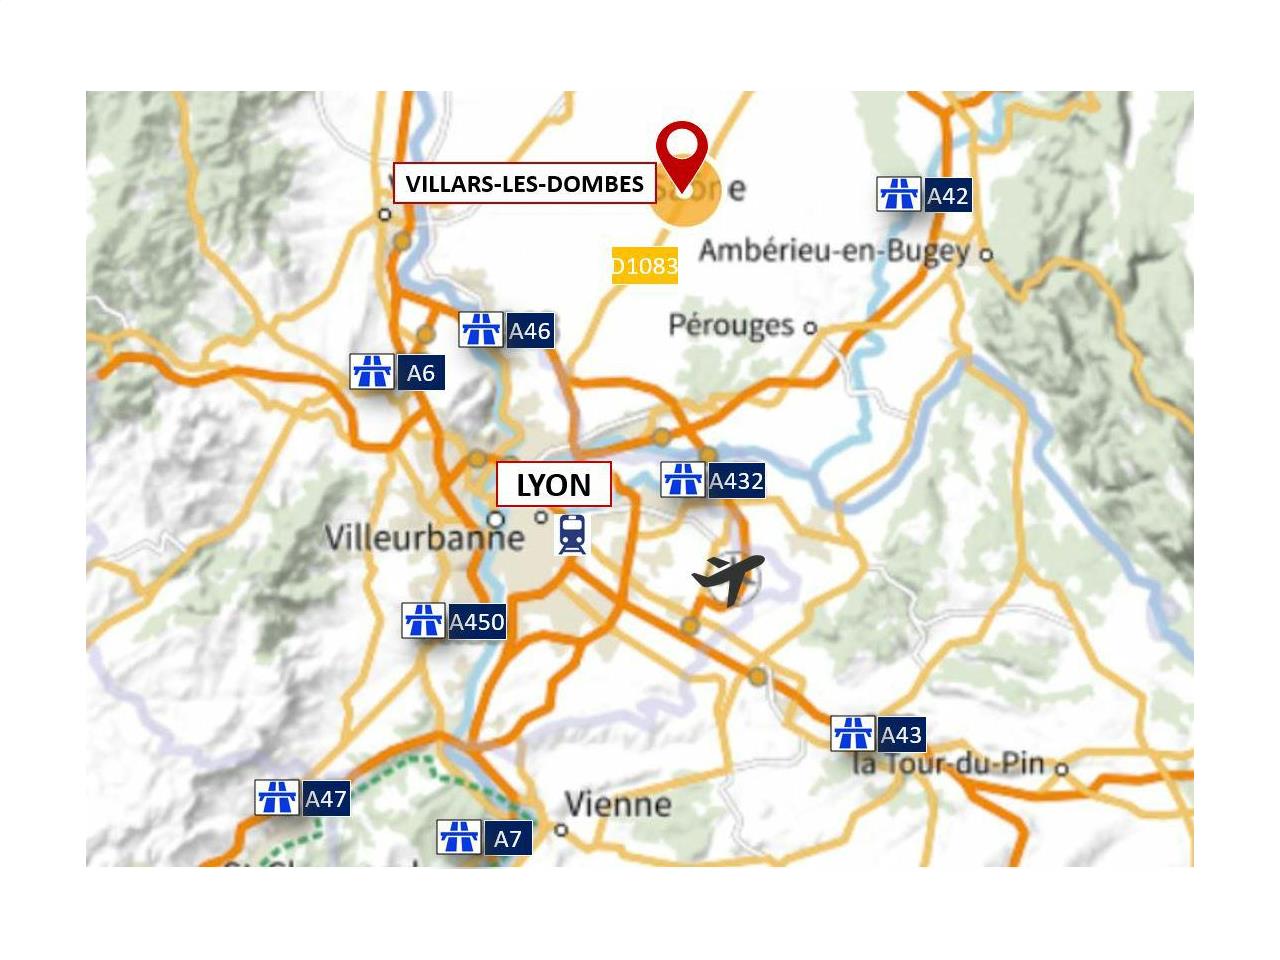 Location entrepôt classe b 5364m² Villars-les-Dombes